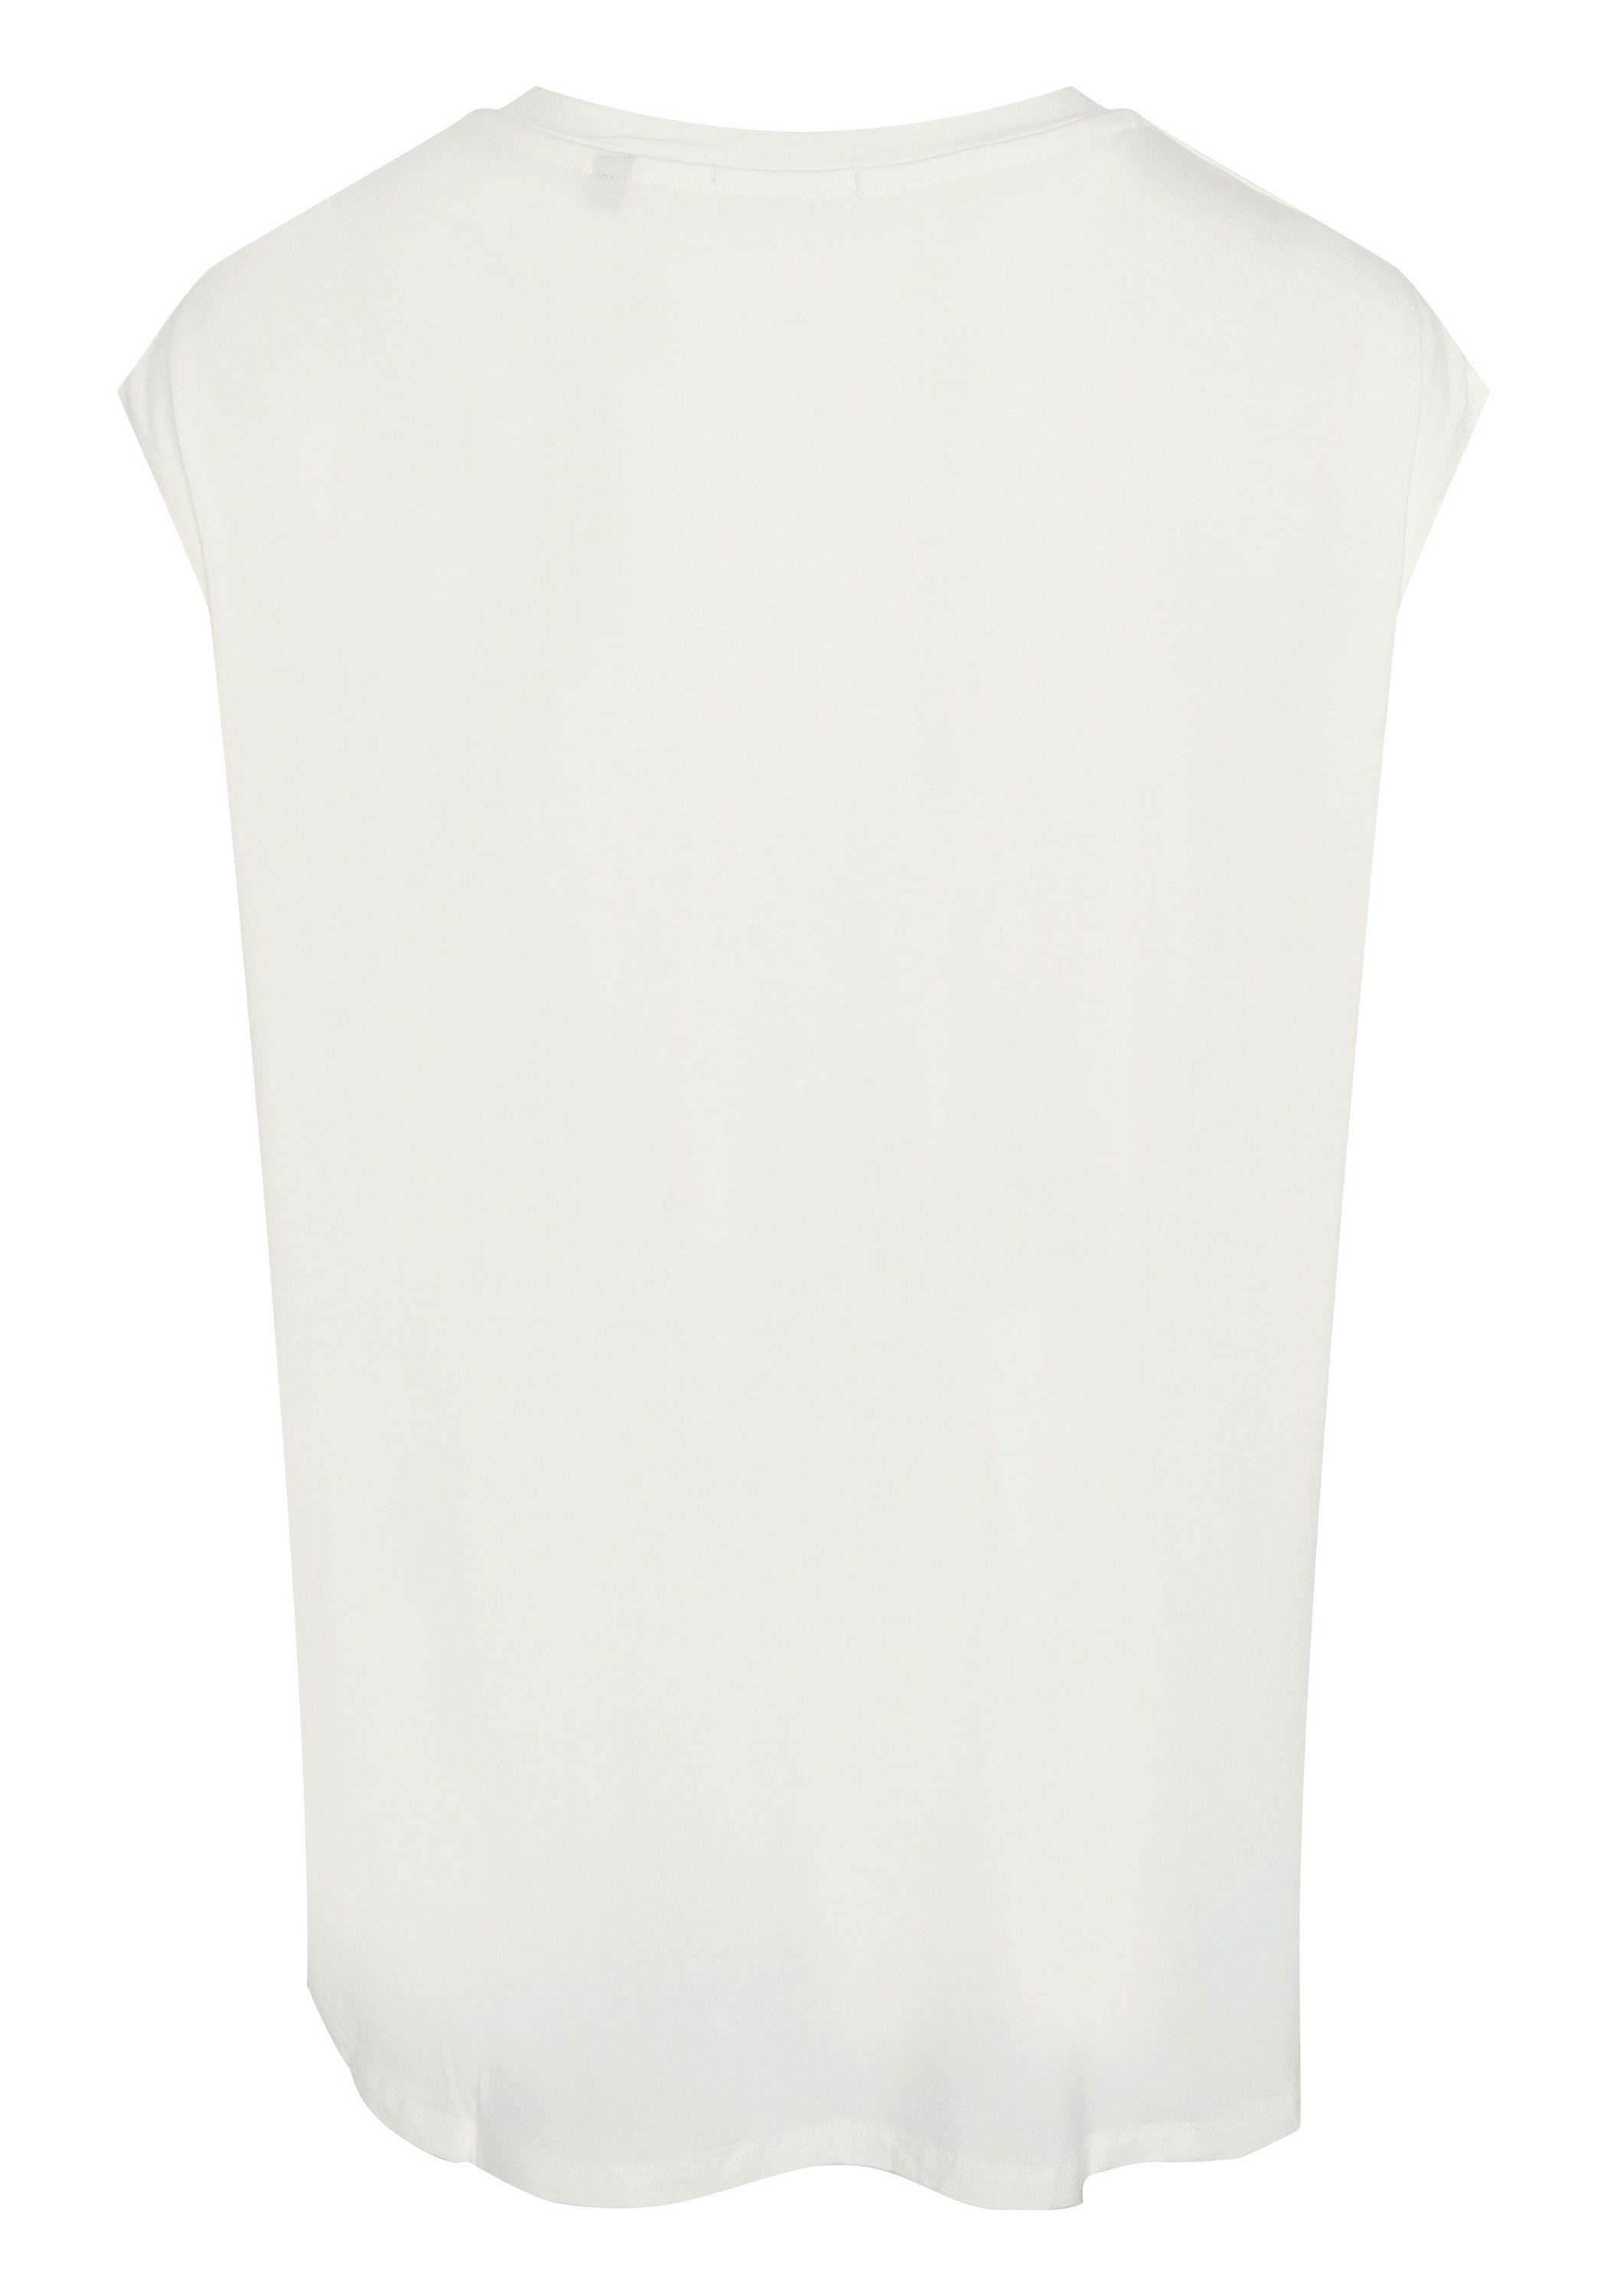 mit White aus Labelprint Chiemsee 1 Print-Shirt Star T-Shirt Viskose-Elasthanmix